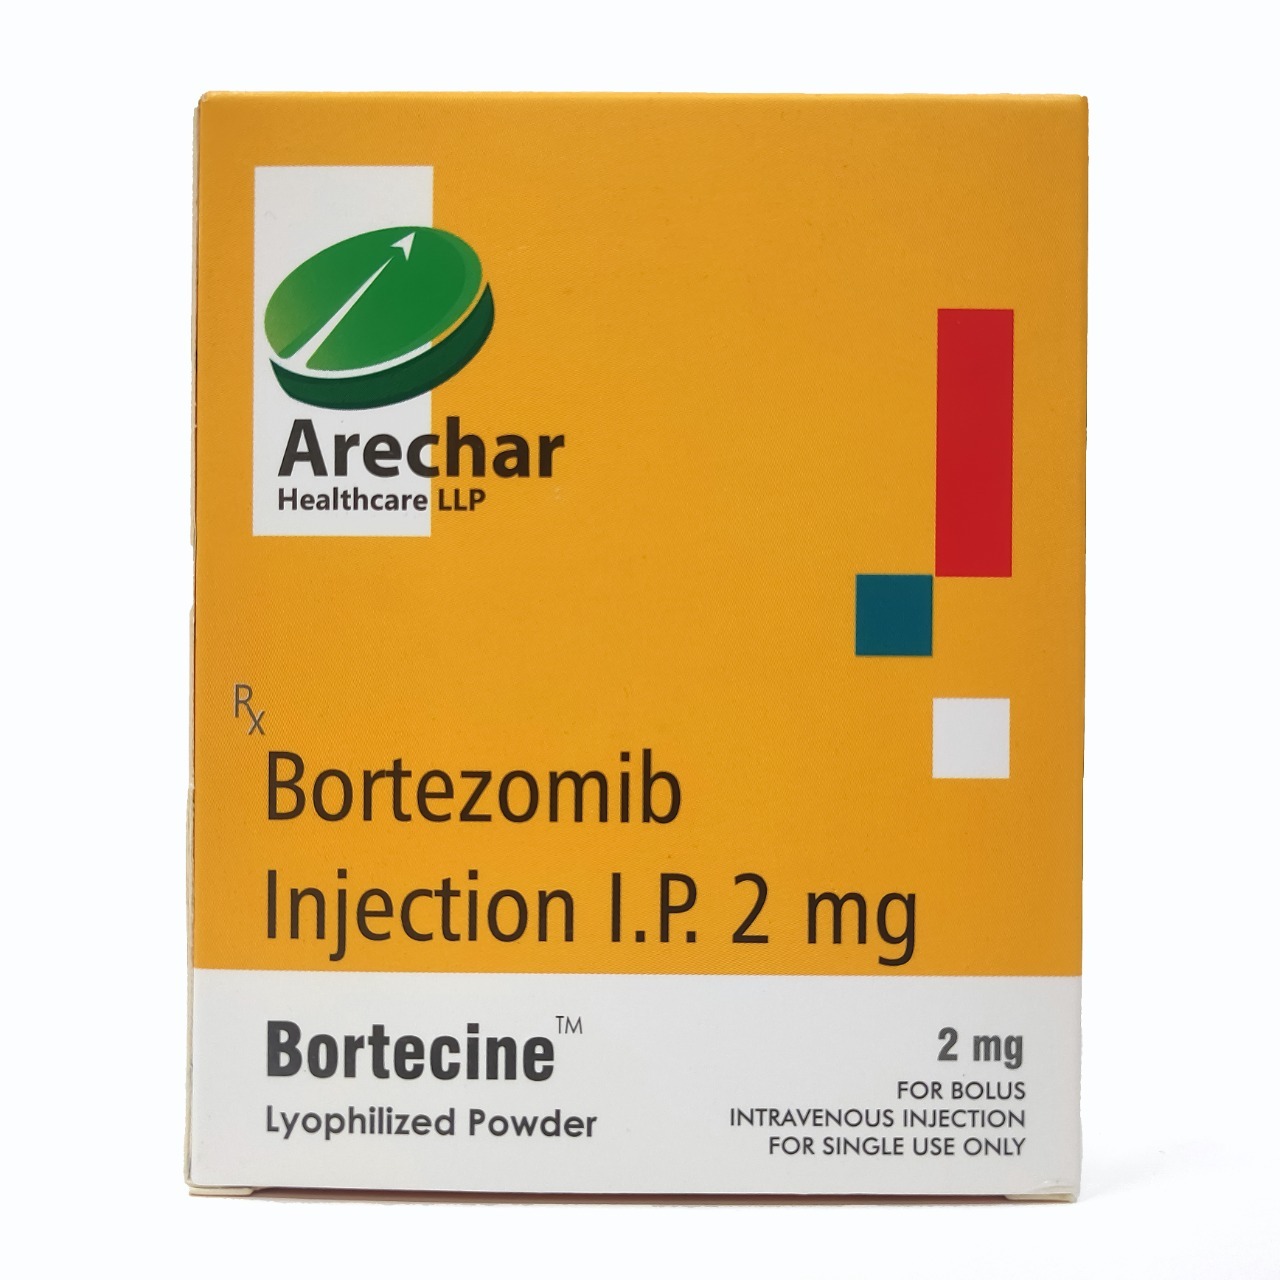 Upto 15% OFF Bortezomib 2mg Injection